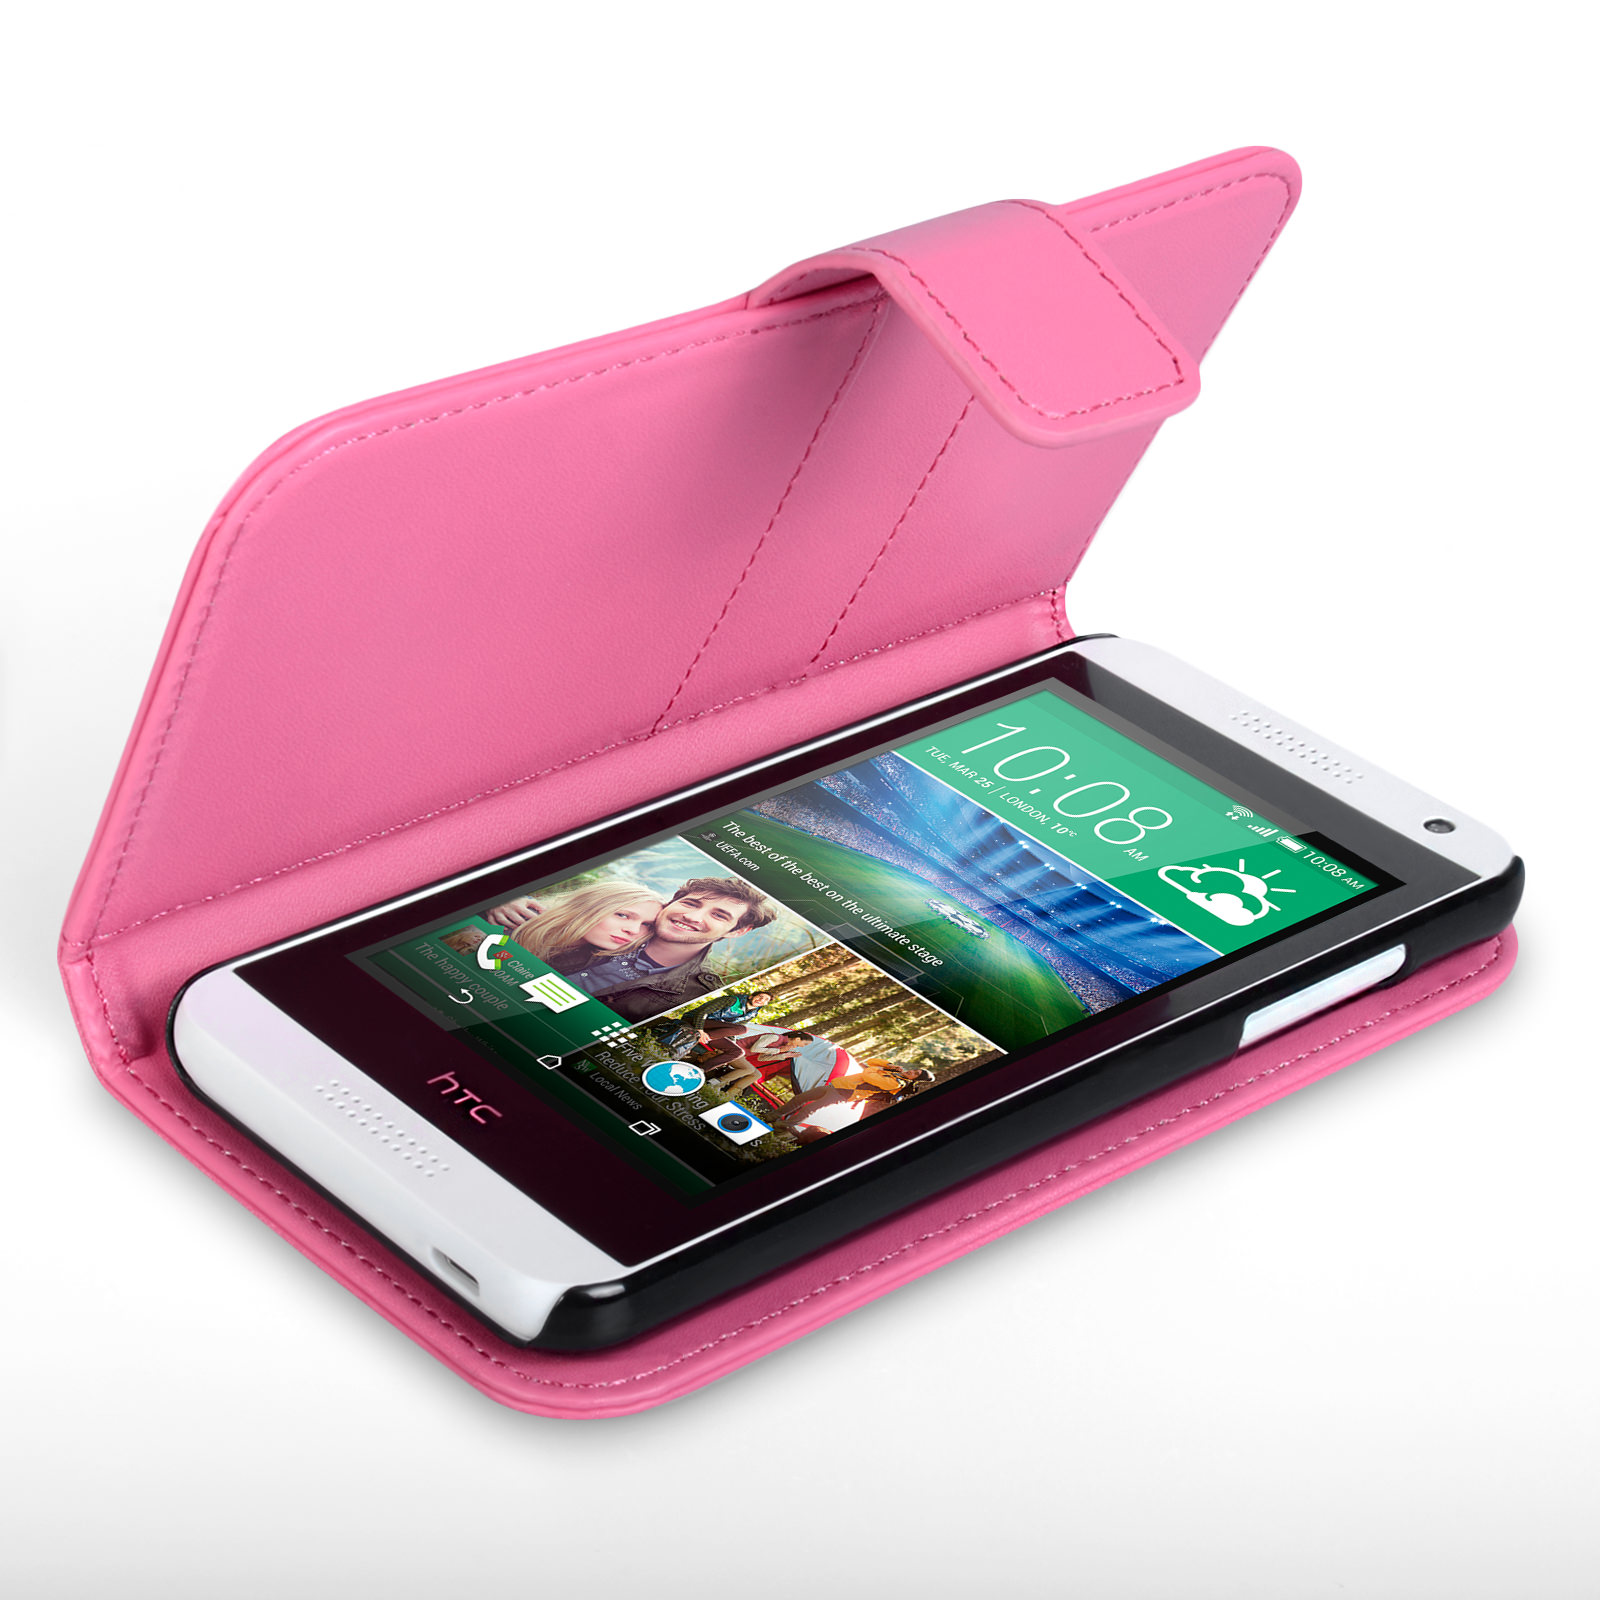 Verzakking Reageren op gang brengen YouSave HTC Desire 610 Wallet Case - Hot Pink | Mobile